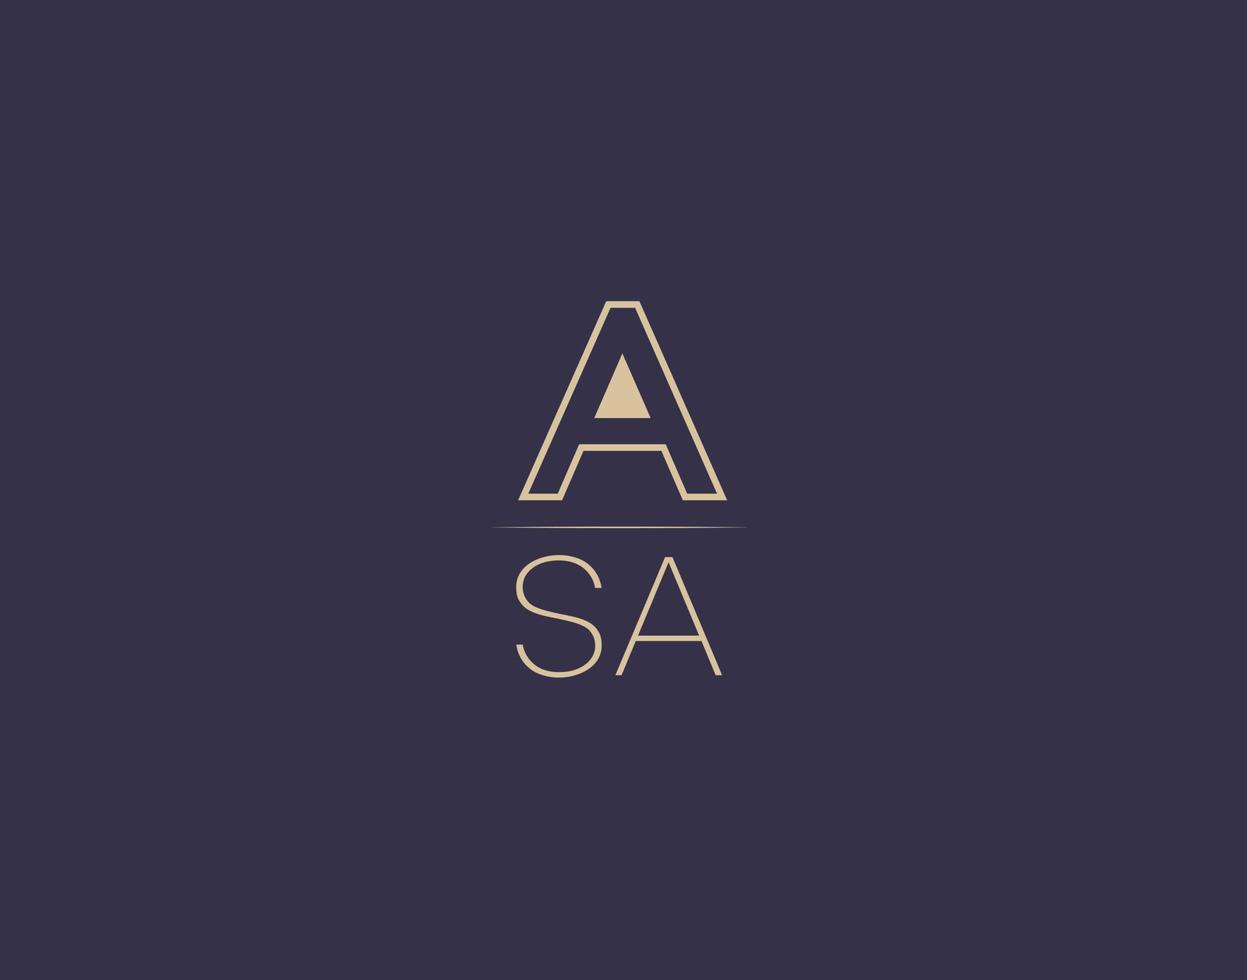 ASA letter logo design modern minimalist vector images